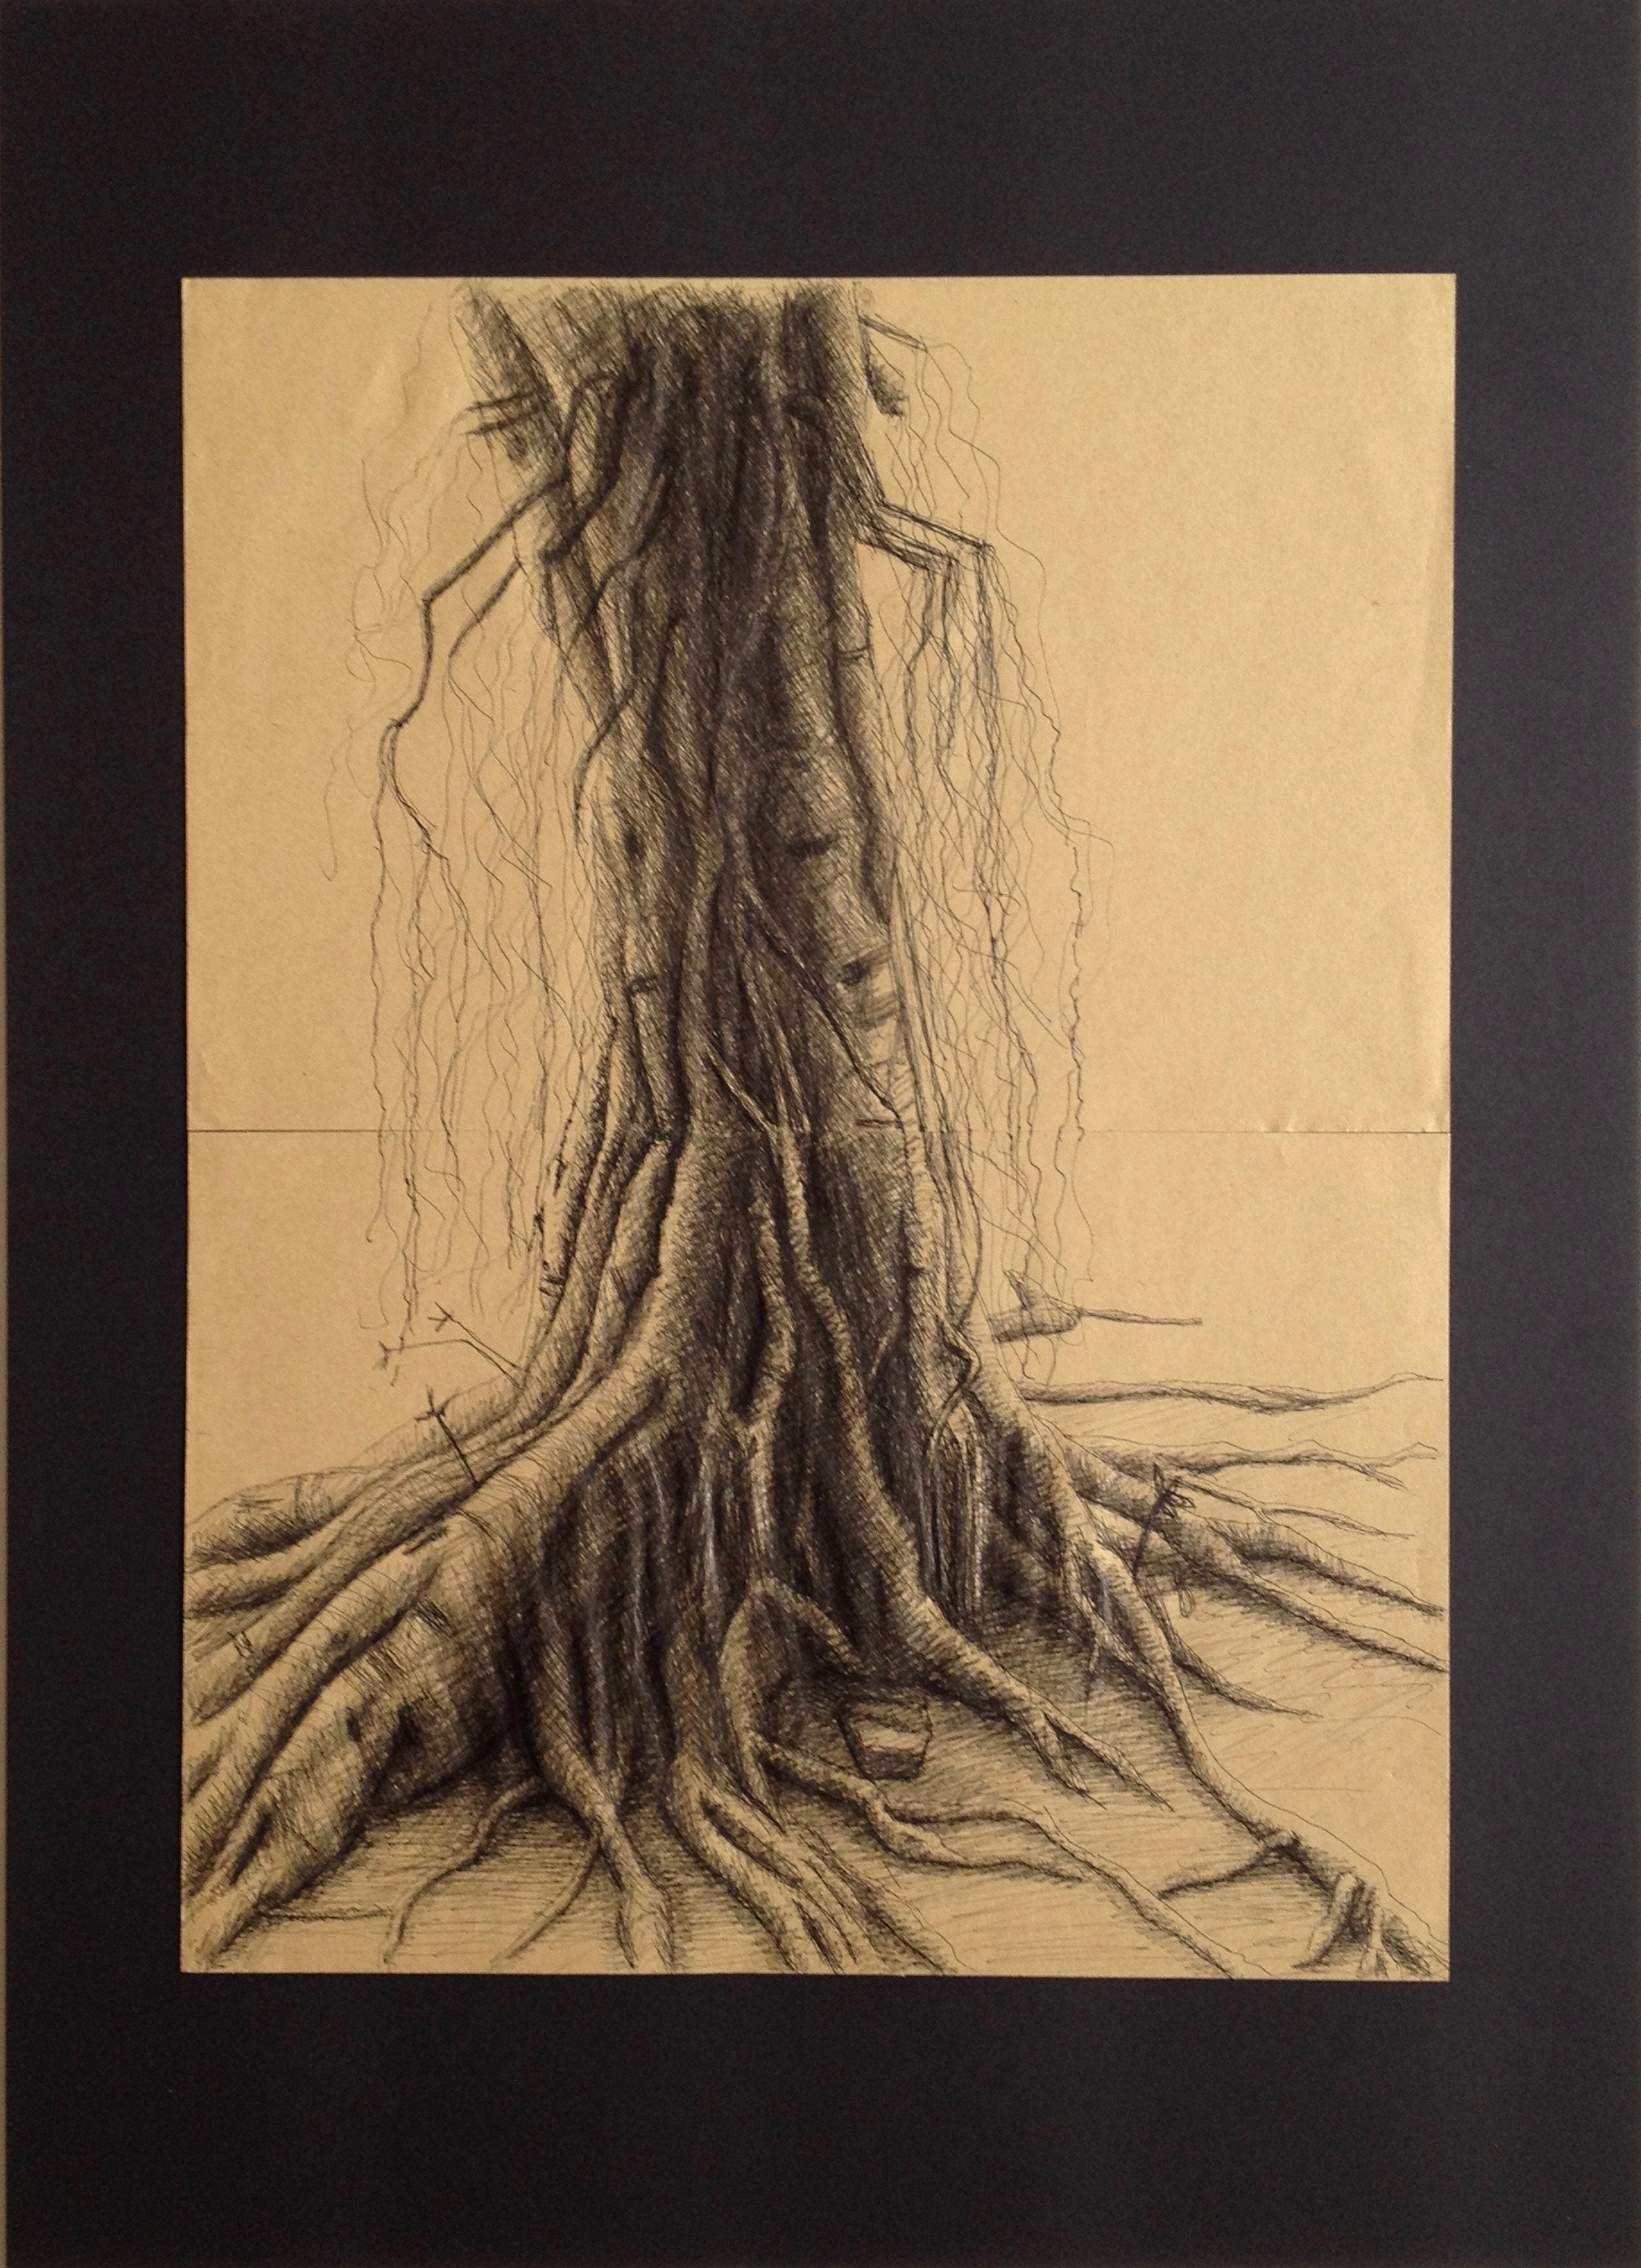 Banyan Tree 2, Ink on Brown Paper Mounted on Black Card, 54 x 40.4 cm, 2014 – 2019 by David Lloyd